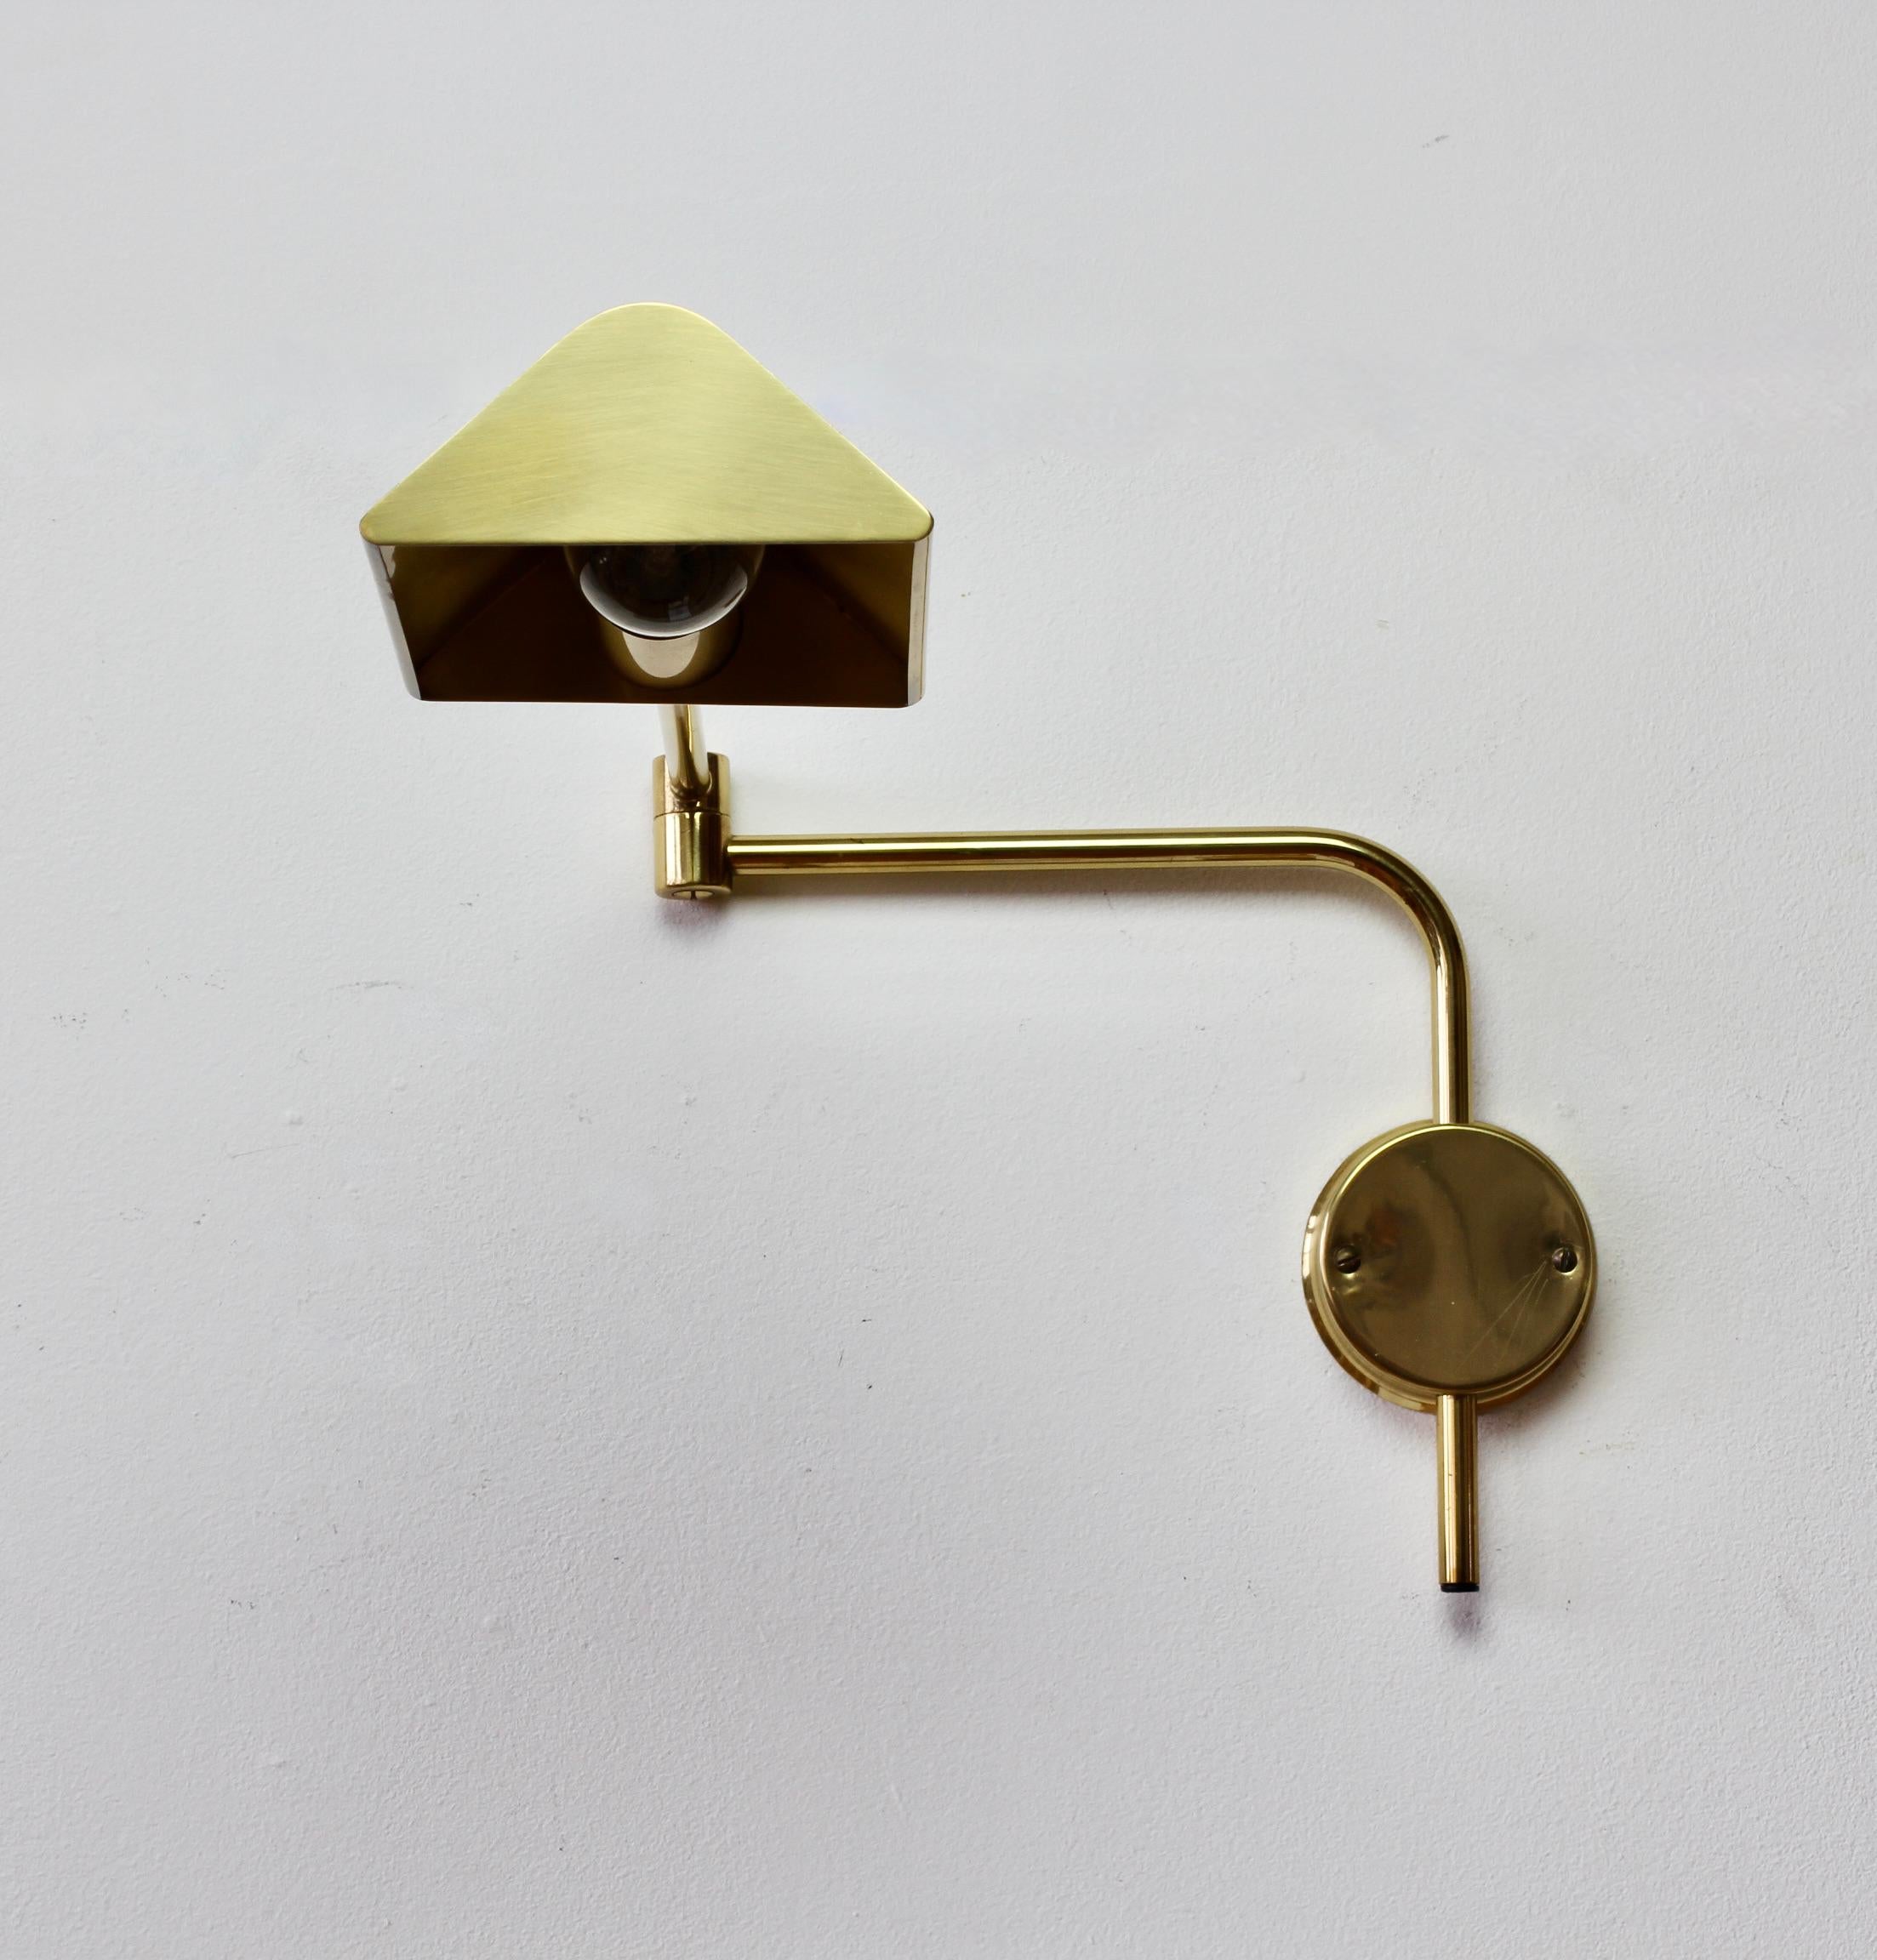 German Florian Schulz Vintage Modernist Brass 1970s Adjustable Reading Wall Lamp Light For Sale